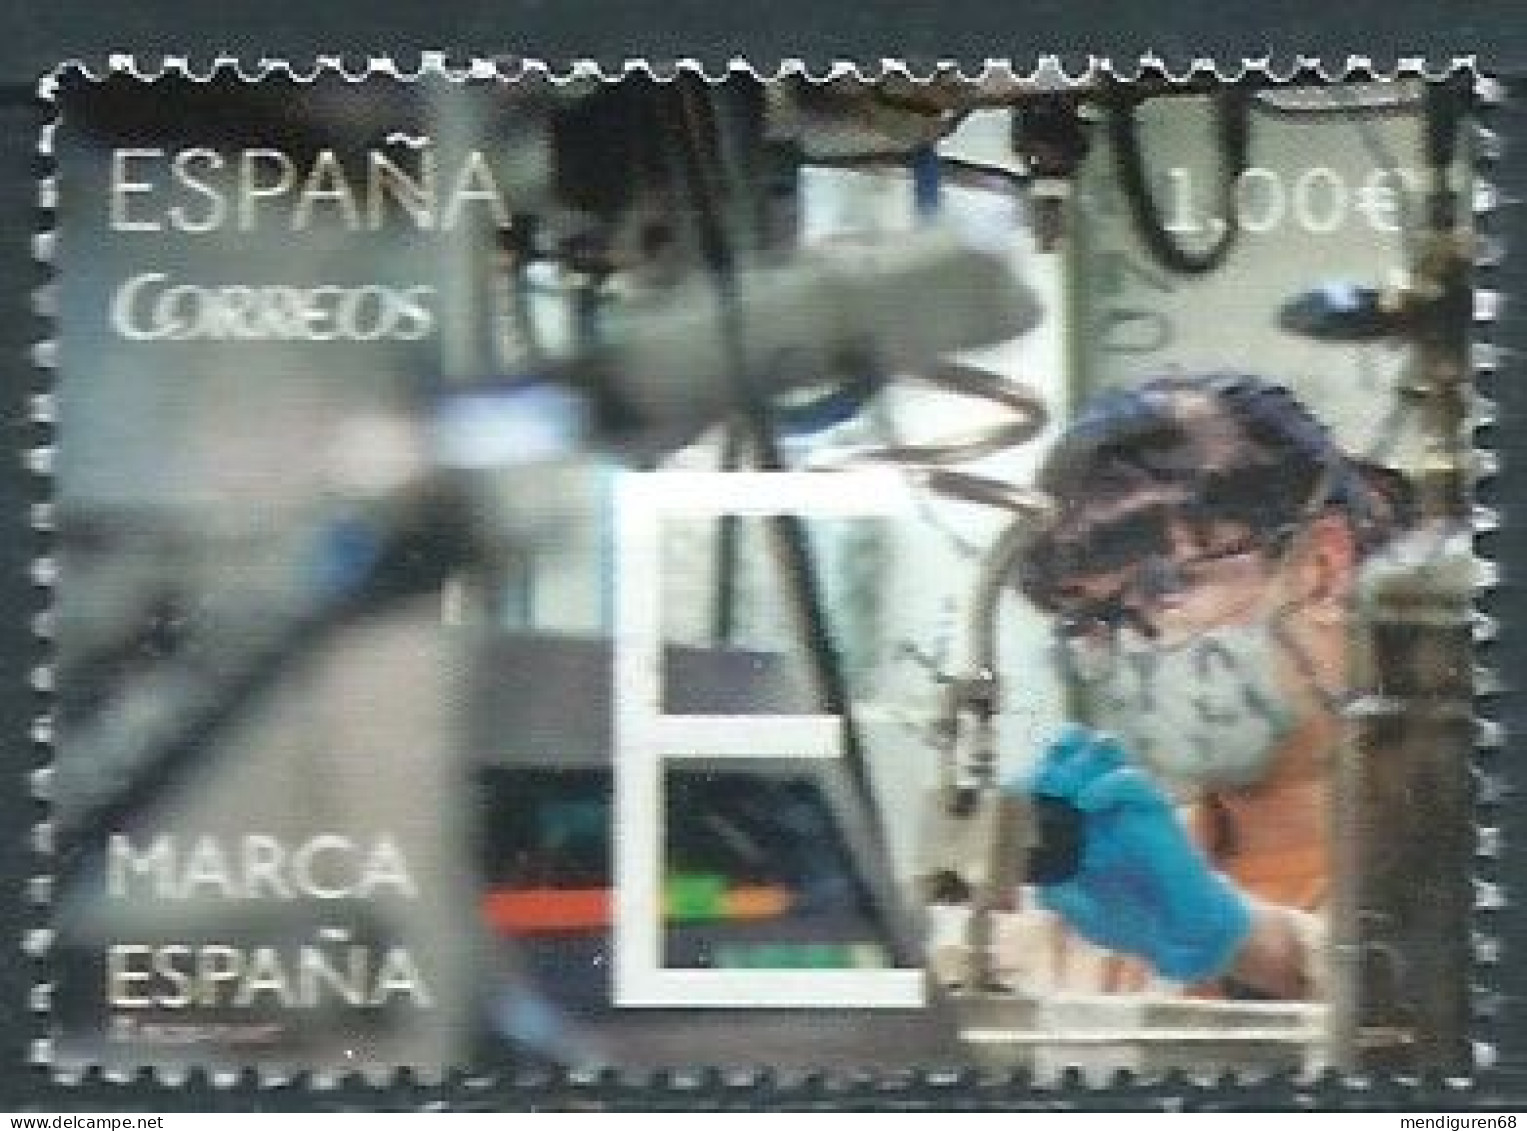 ESPAGNE SPANIEN SPAIN ESPAÑA 2014 MARC ESPAÑA E-EMPRESA USED ED 4878 YT 4582 MI 4877 SG 4855 SC 3982 - Used Stamps